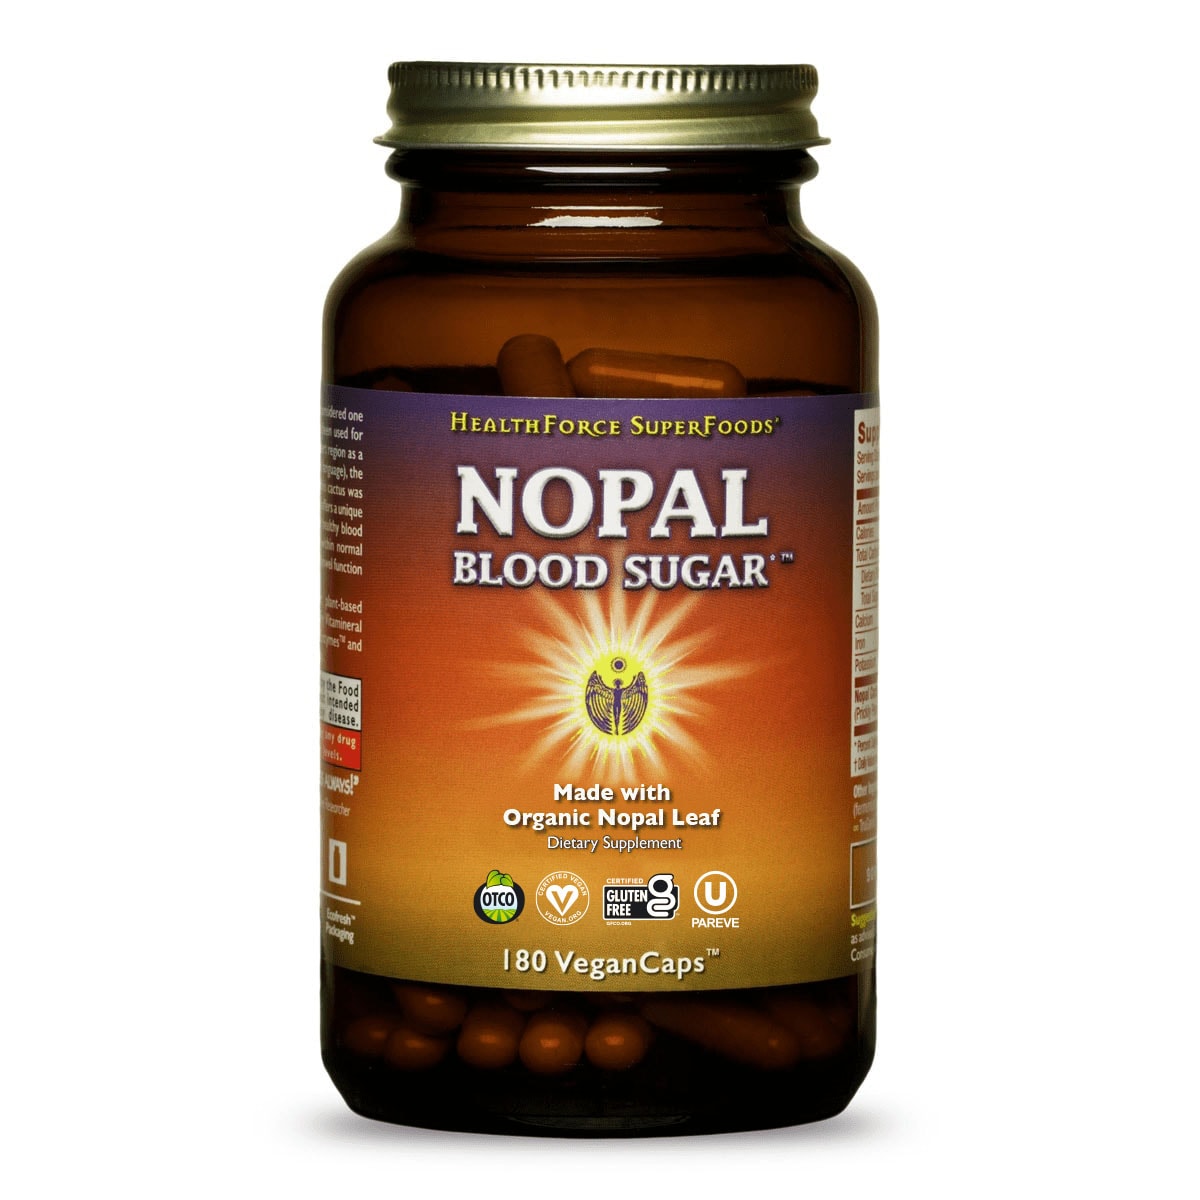 Nopal Blood Sugar™